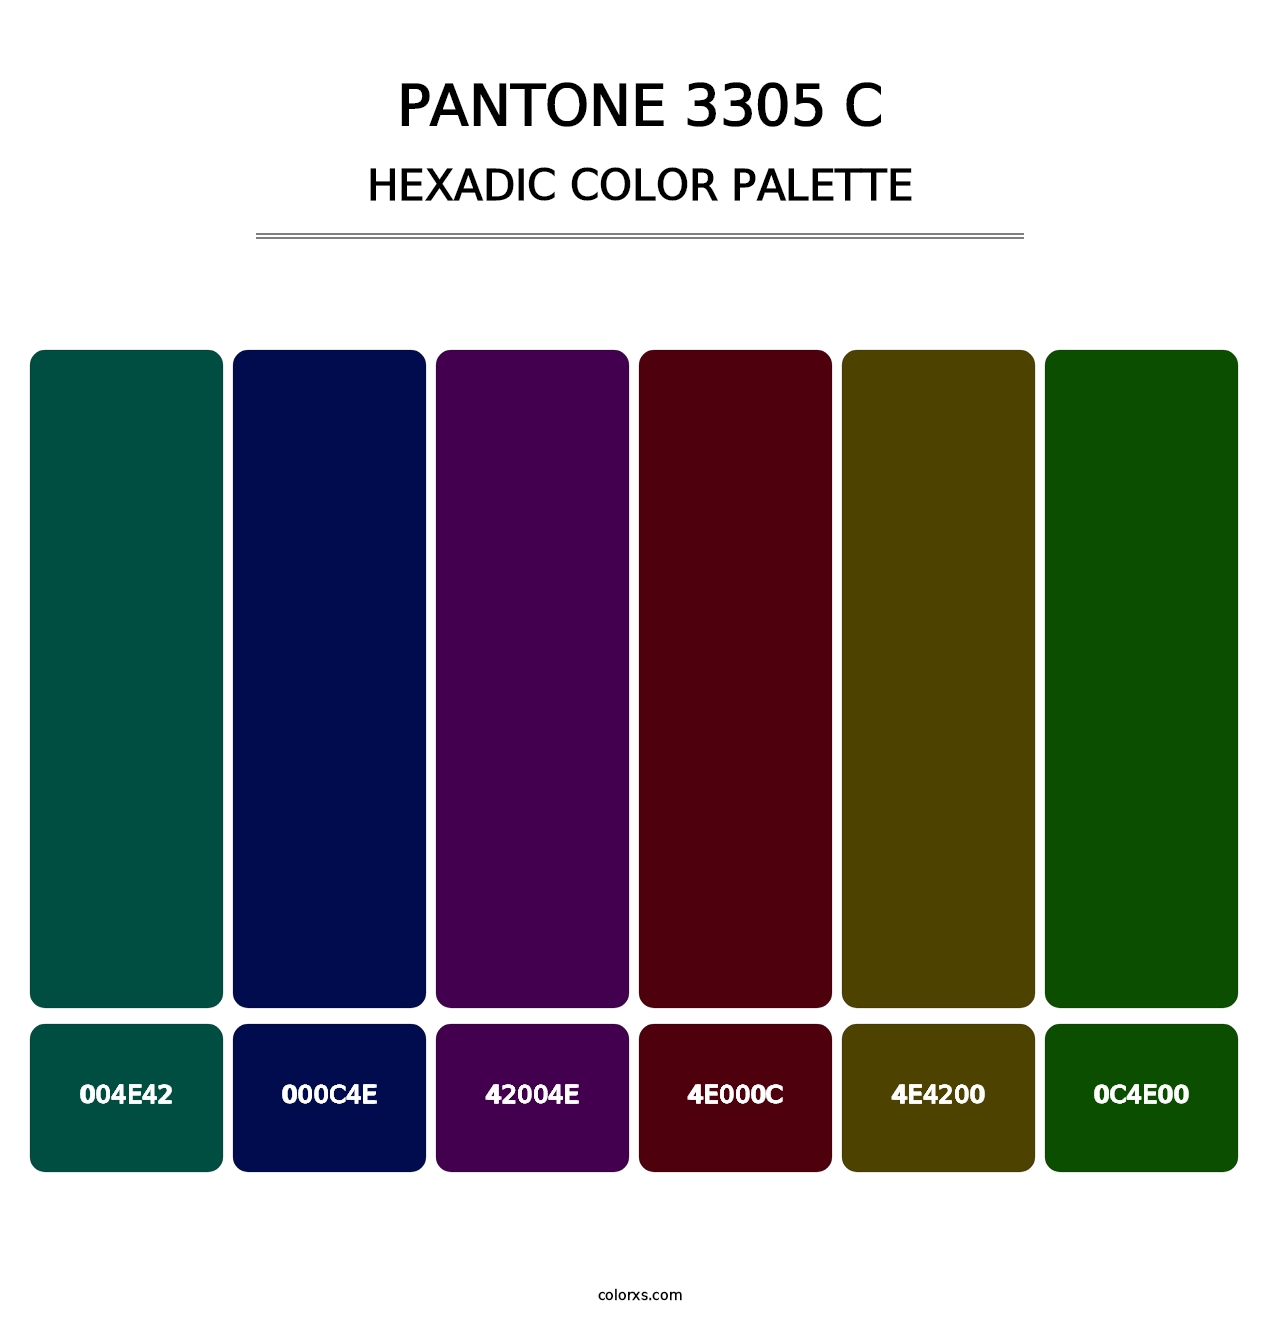 PANTONE 3305 C - Hexadic Color Palette